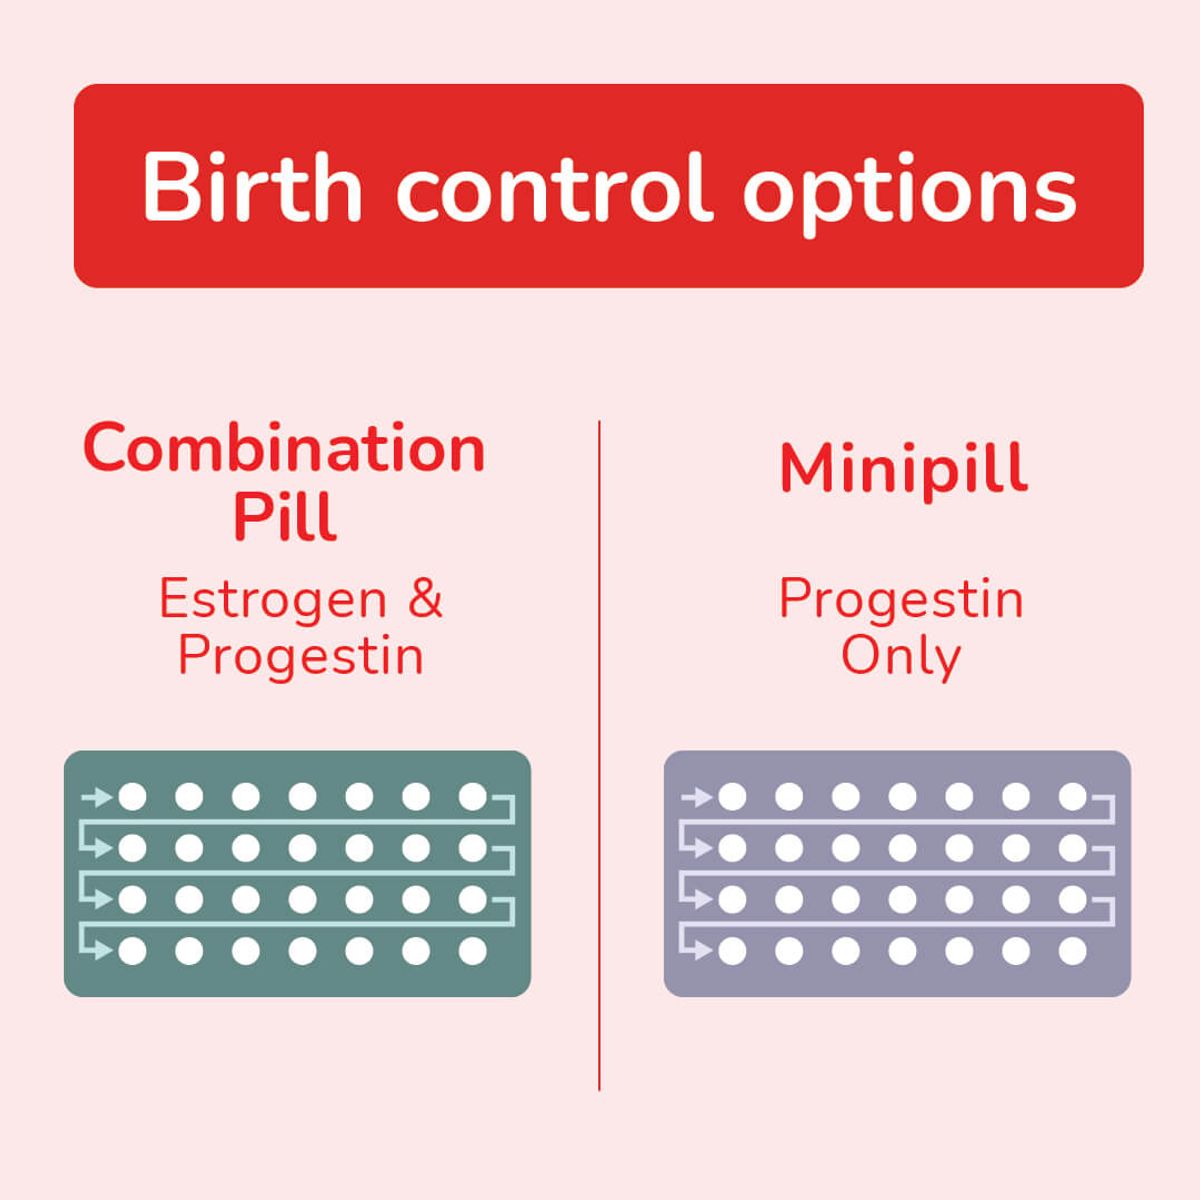 Birth Control Options: Combination Pill (Estrogen & Progestin) vs. Minipill (Progestin Only)